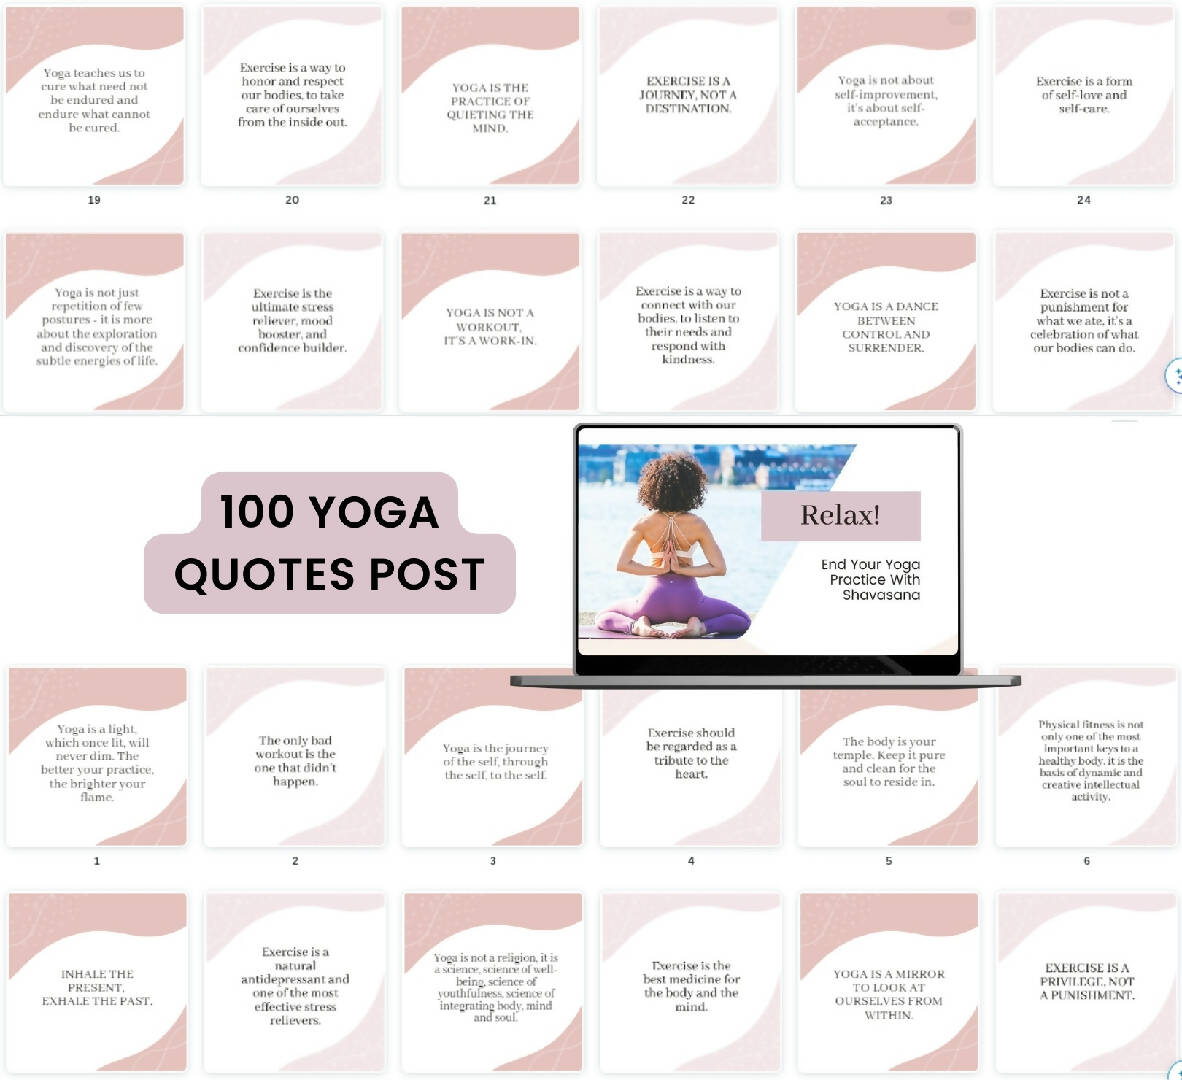 400 Yoga Templates